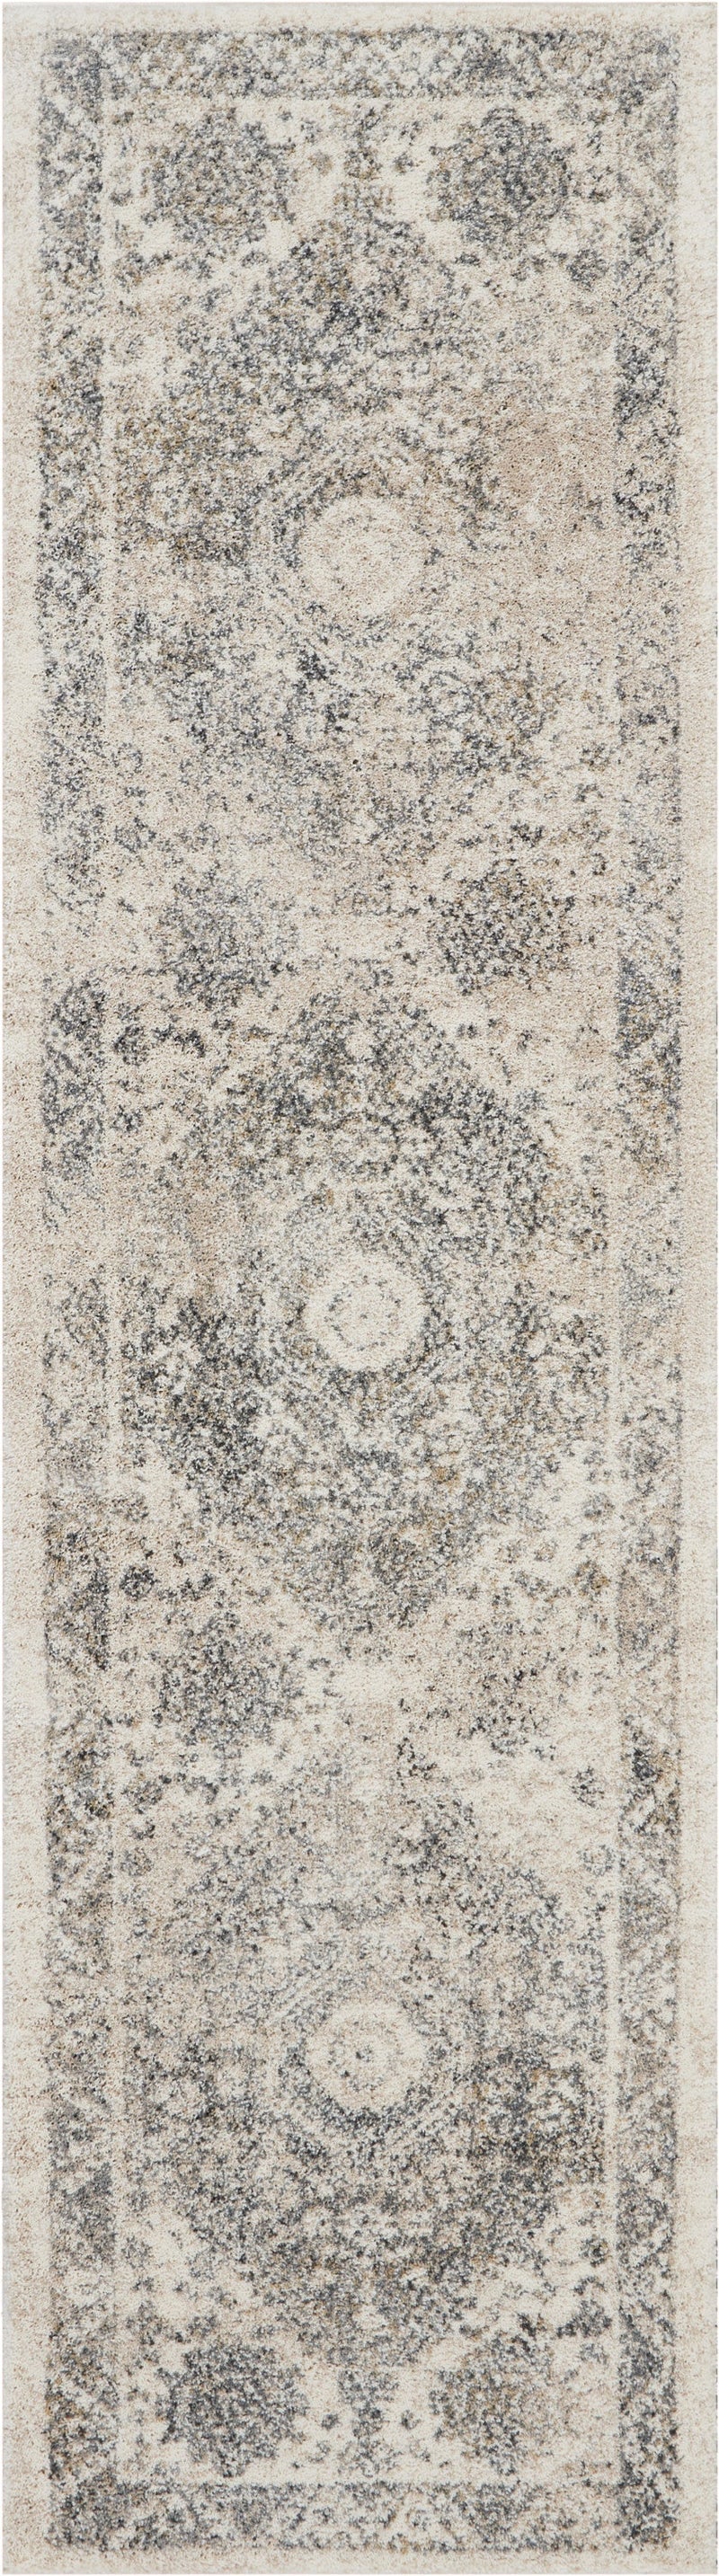 media image for fusion cream grey rug by nourison 99446317100 redo 2 280